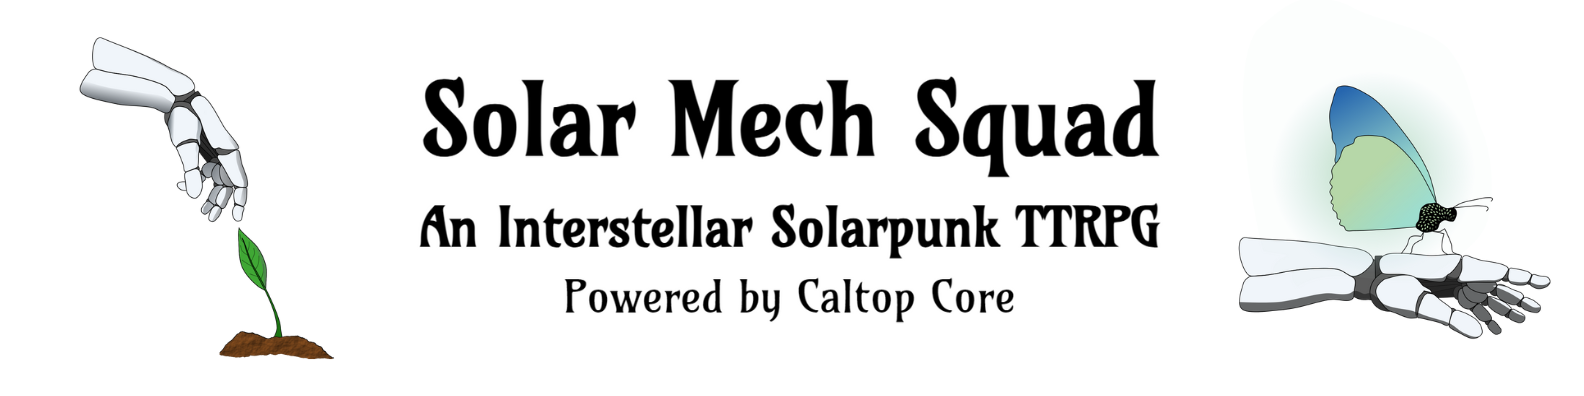 Solar Mech Squad: A Solarpunk TTRPG